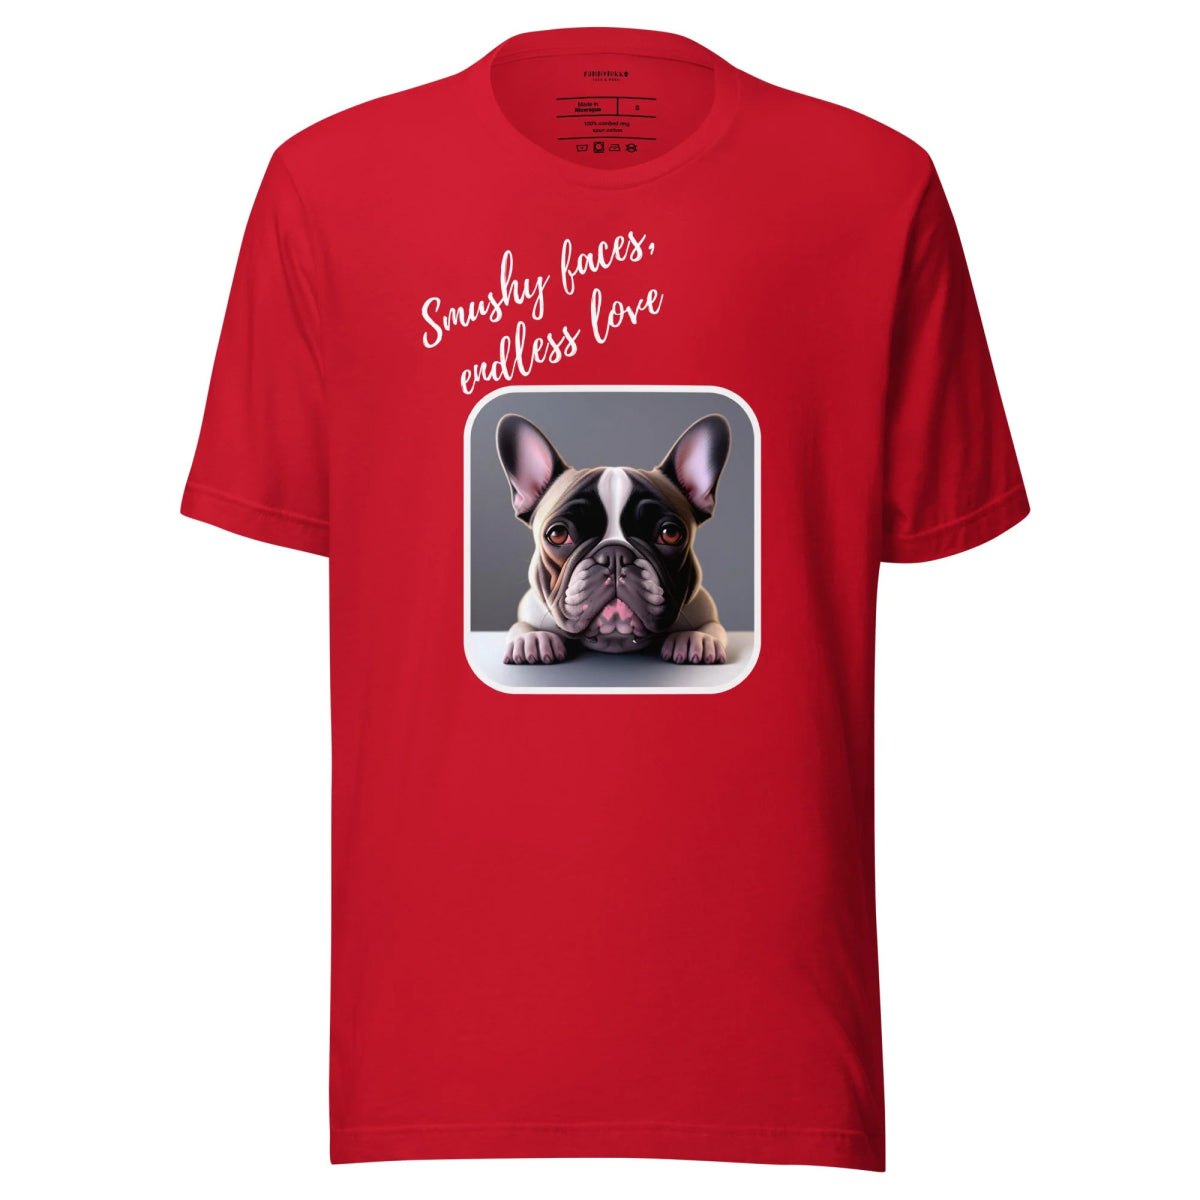 The Frenchie Love Fest Staple T-Shirt - Funny Nikko